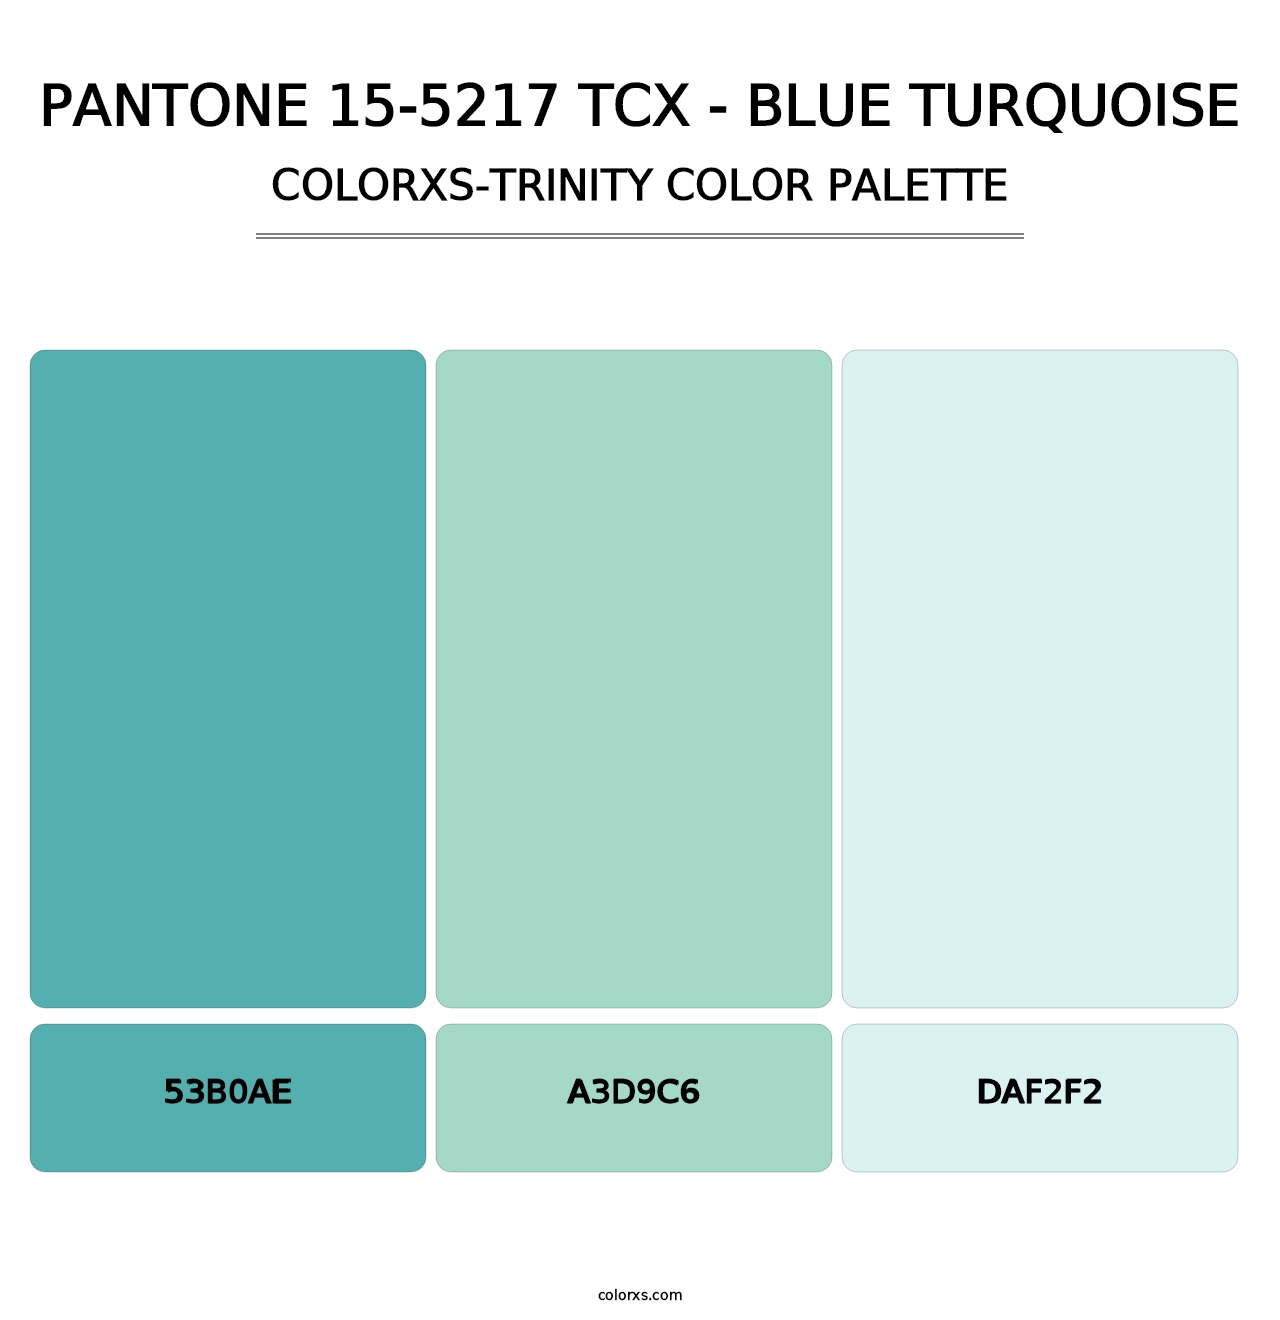 PANTONE 15-5217 TCX - Blue Turquoise - Colorxs Trinity Palette